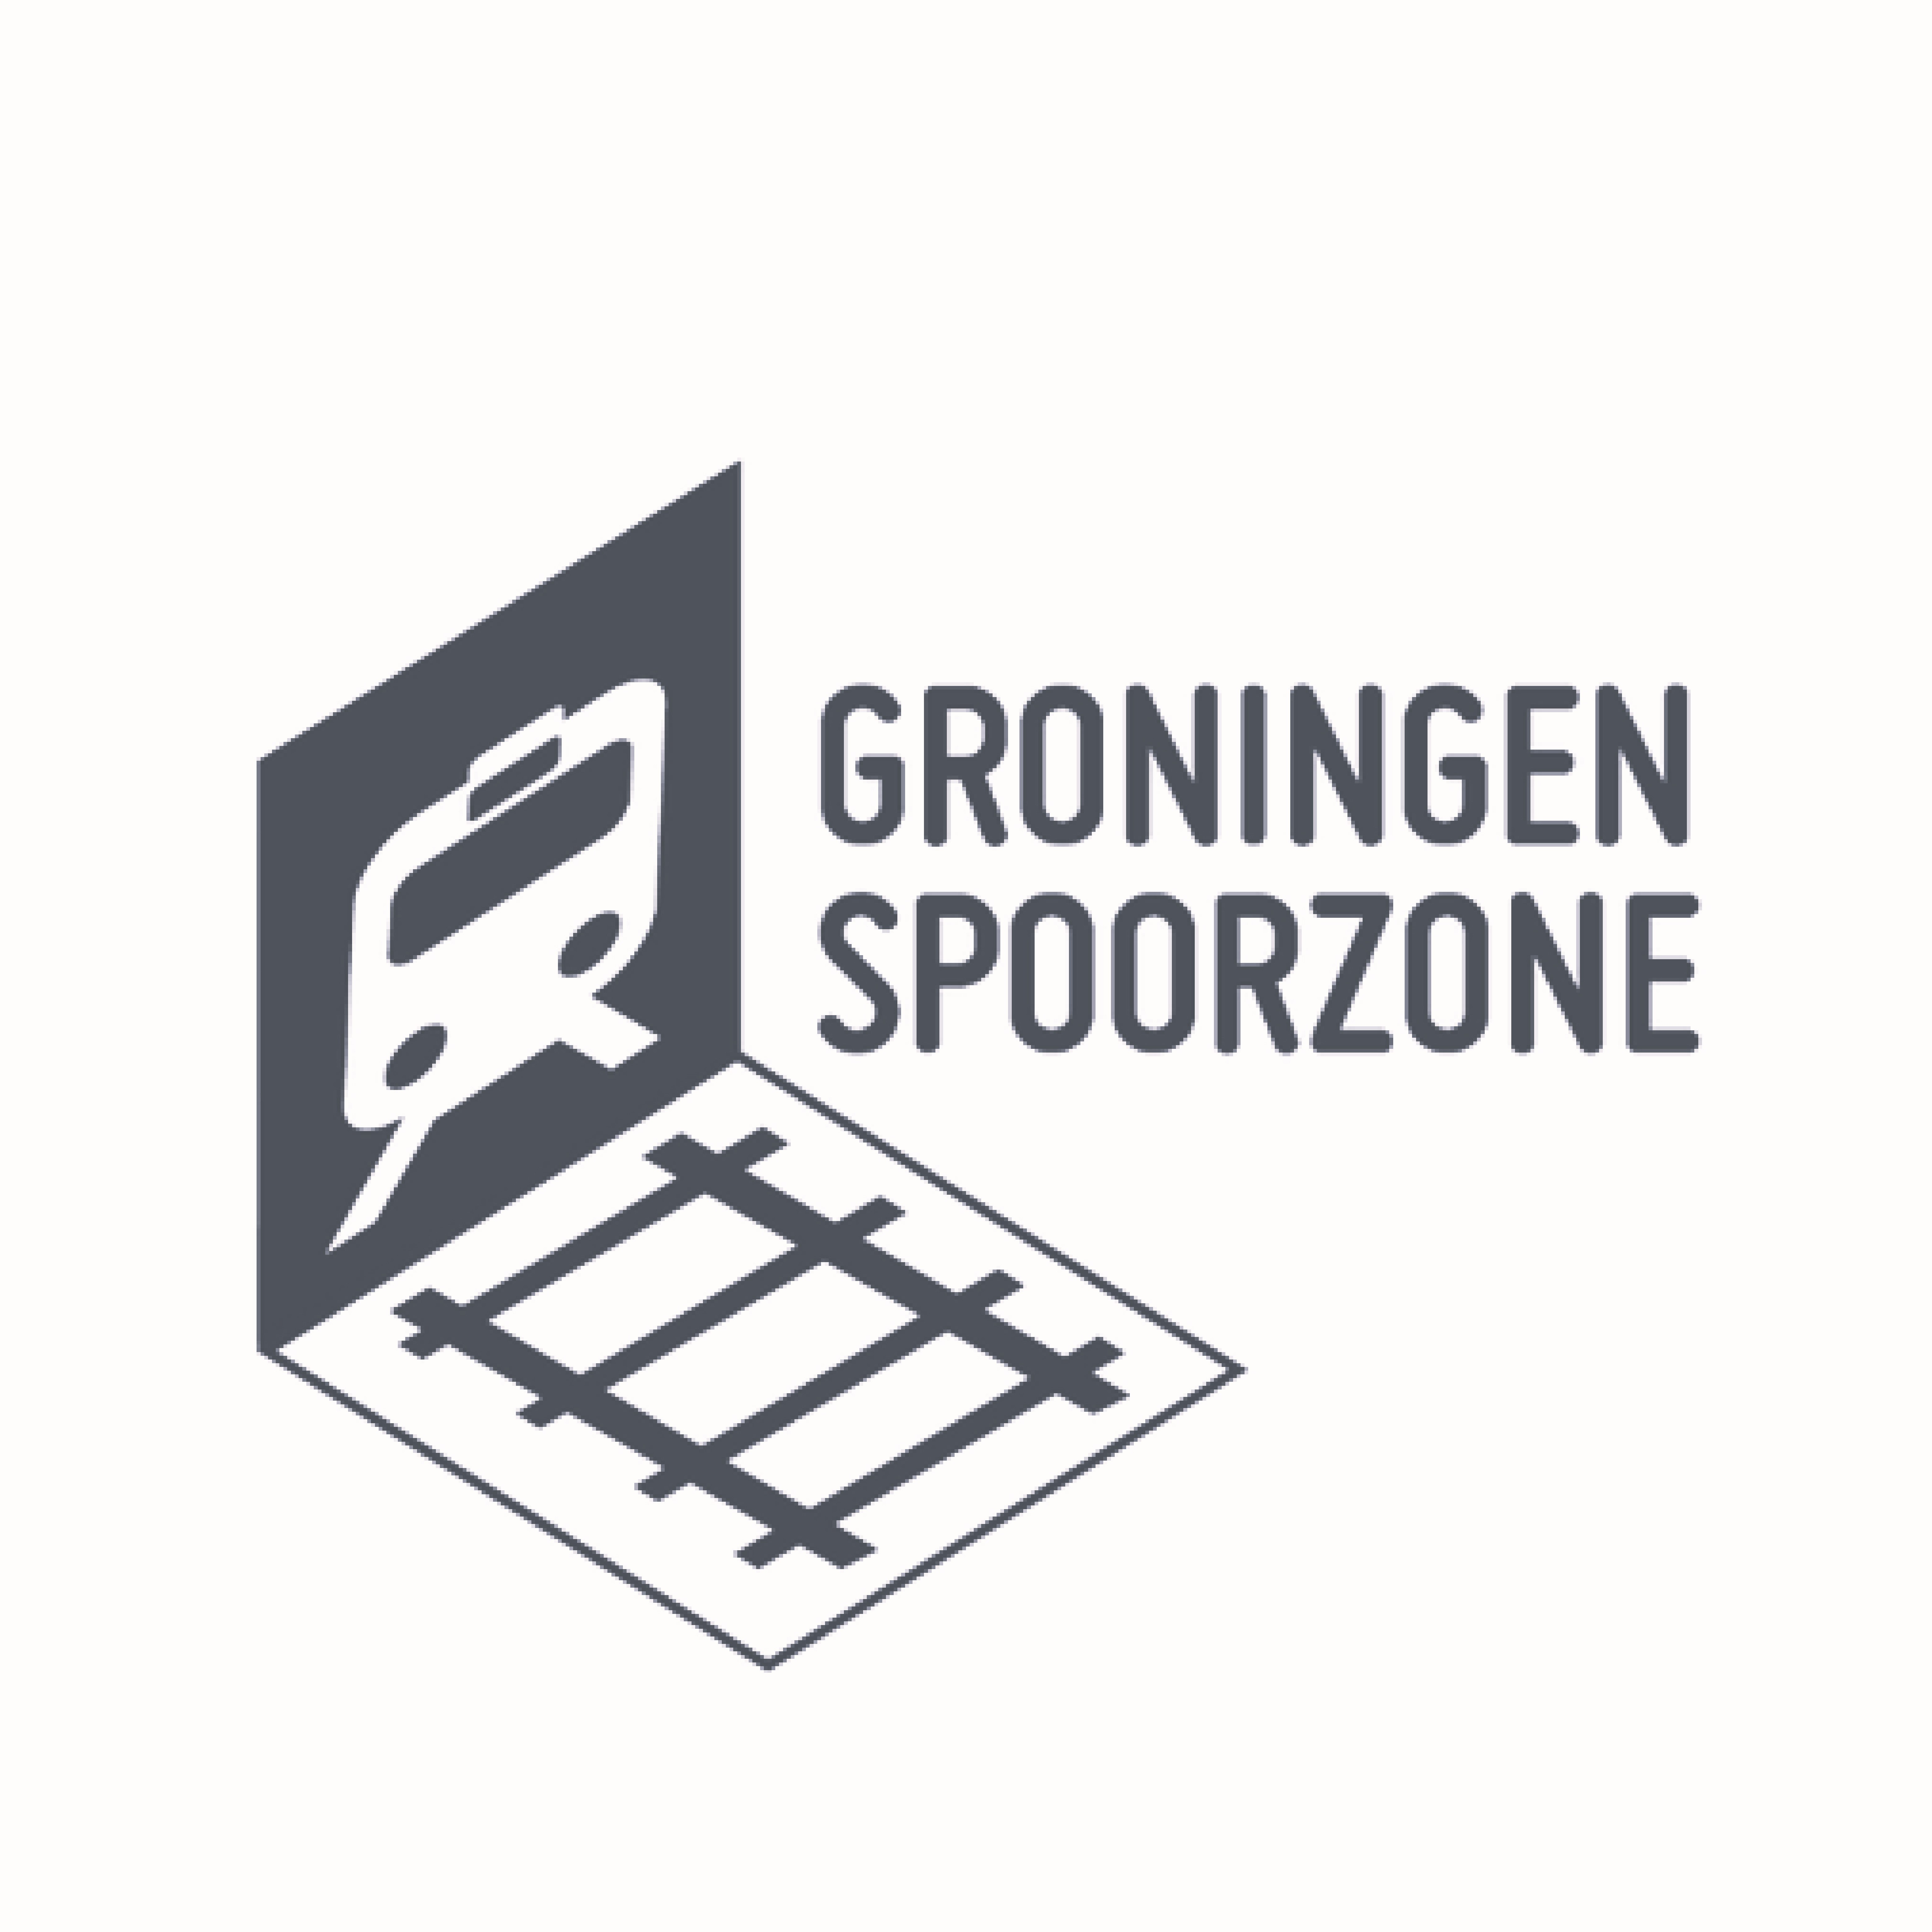 Groningen Spoorzone (zwart-wit)